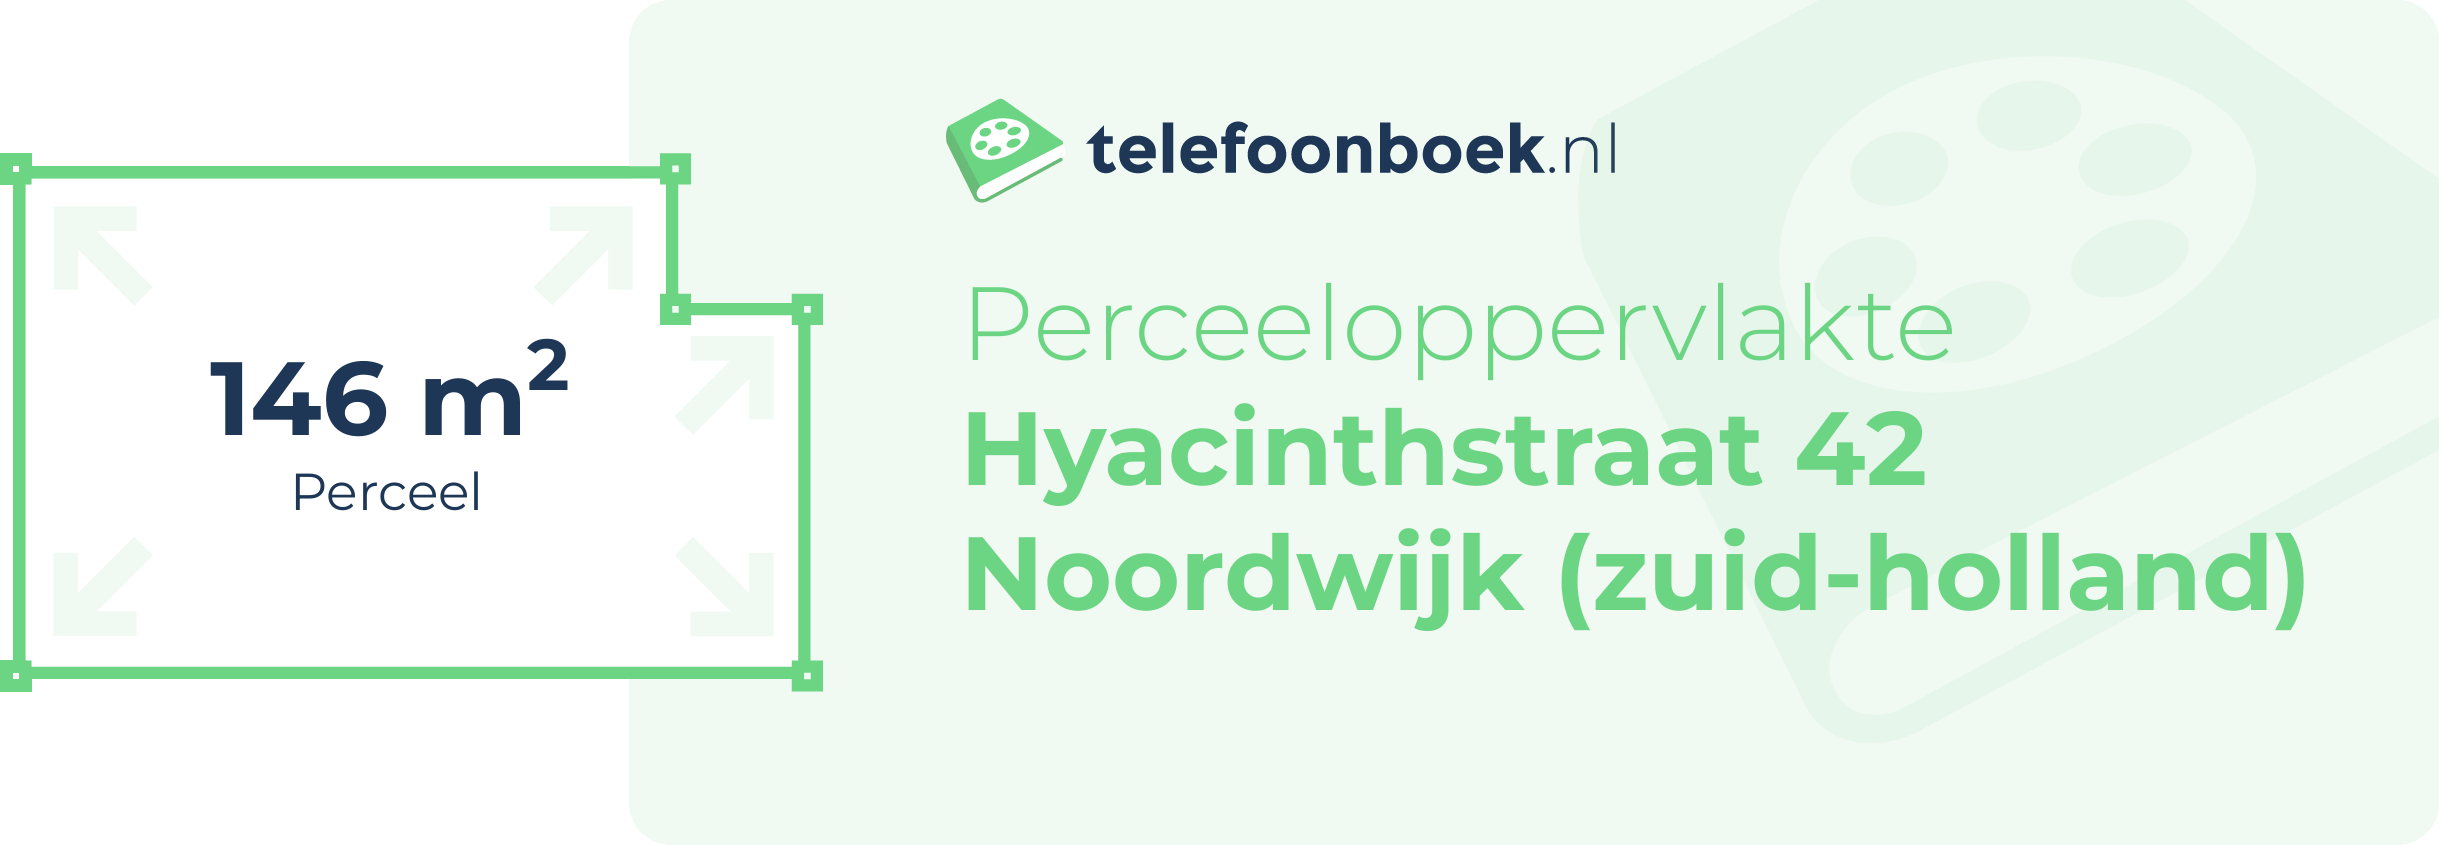 Perceeloppervlakte Hyacinthstraat 42 Noordwijk (Zuid-Holland)